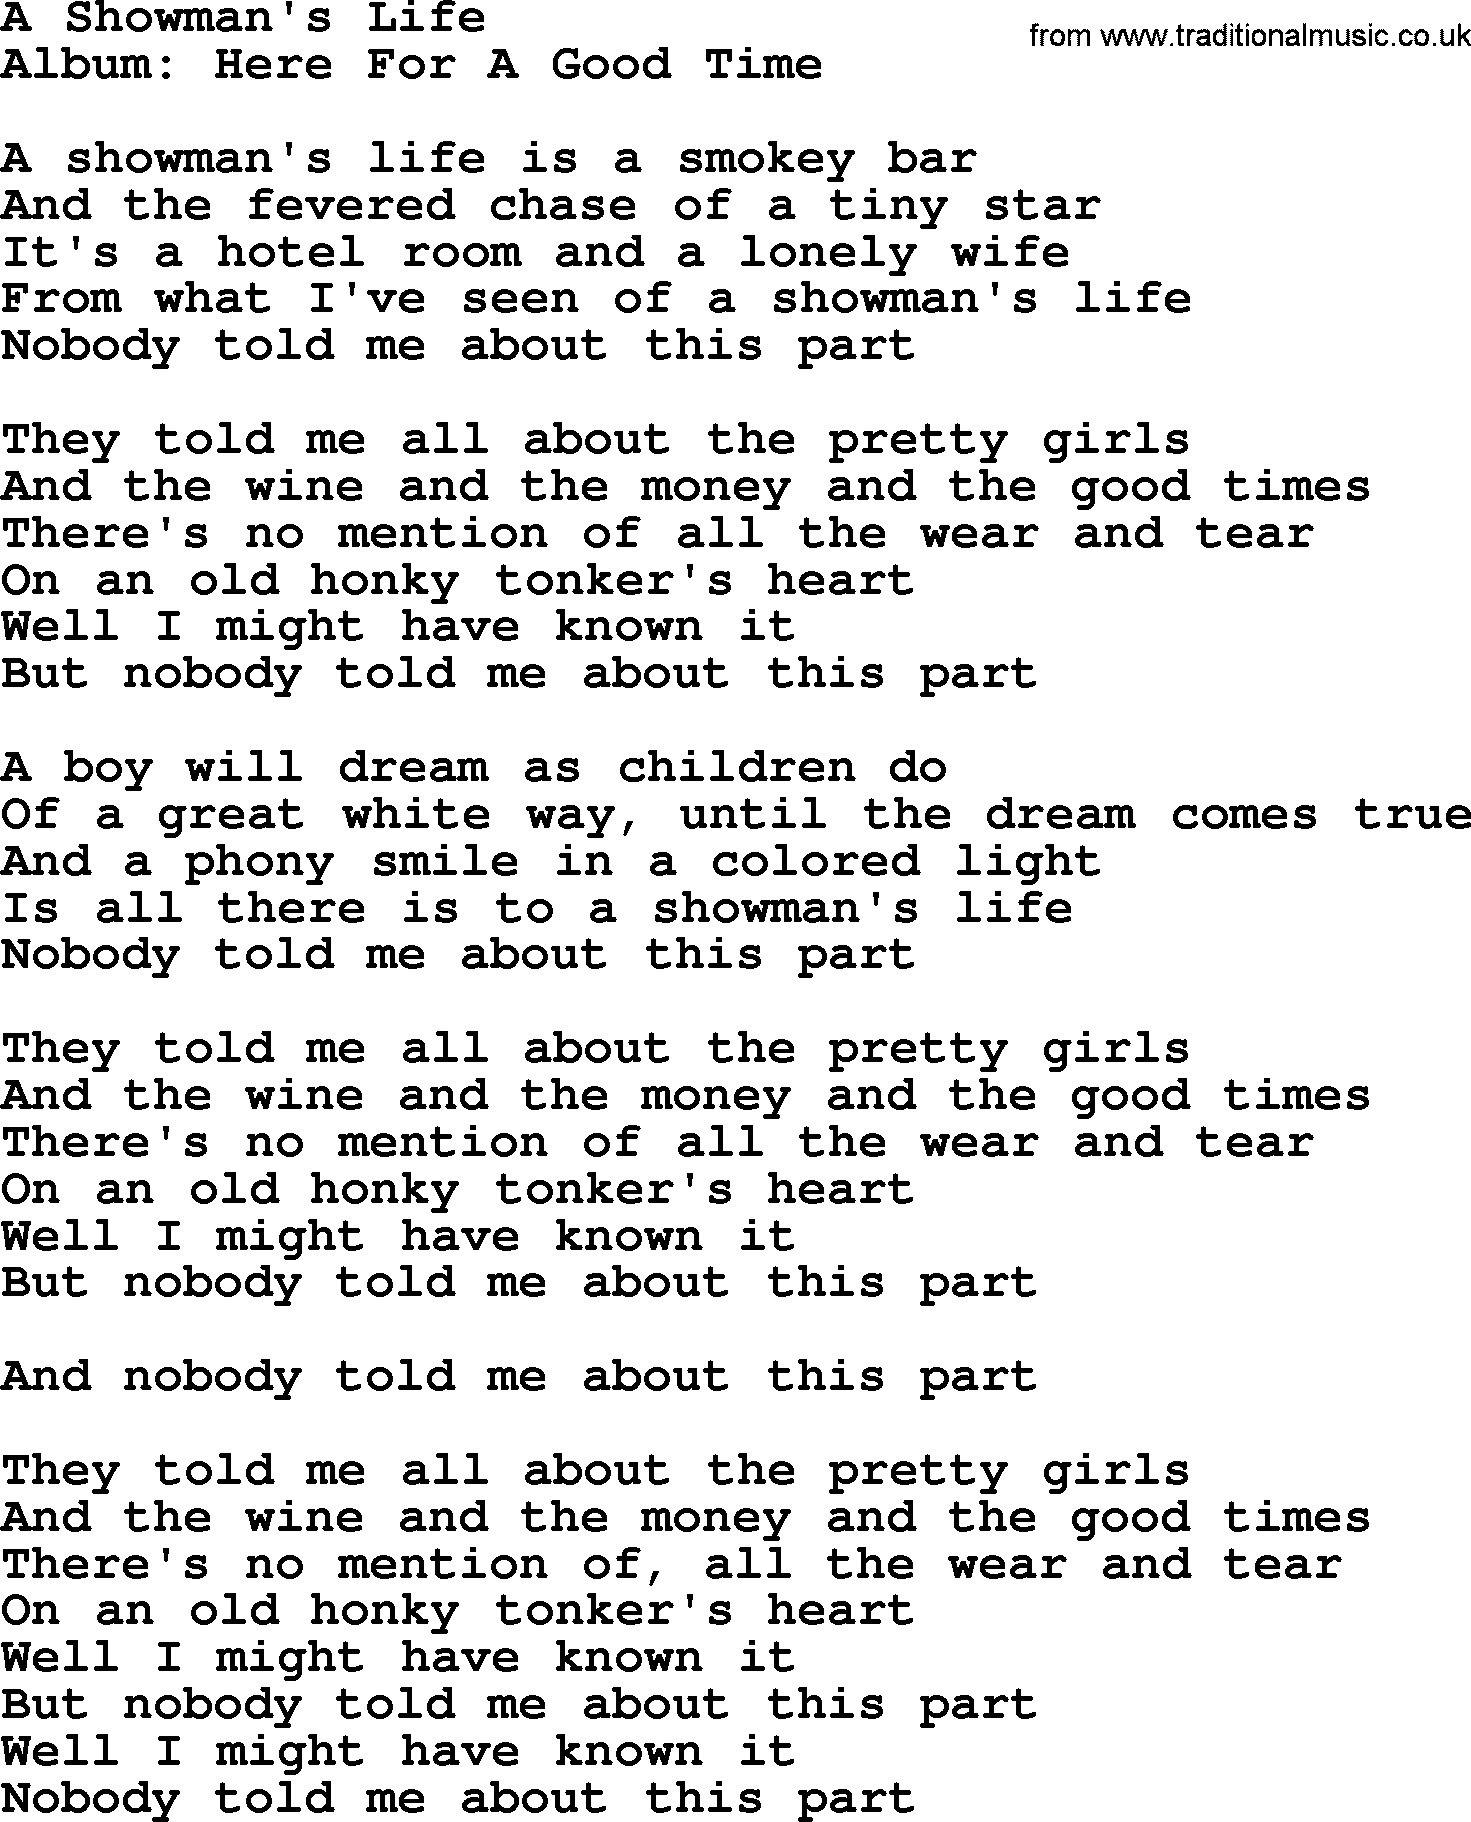 George Strait song: A Showman's Life, lyrics